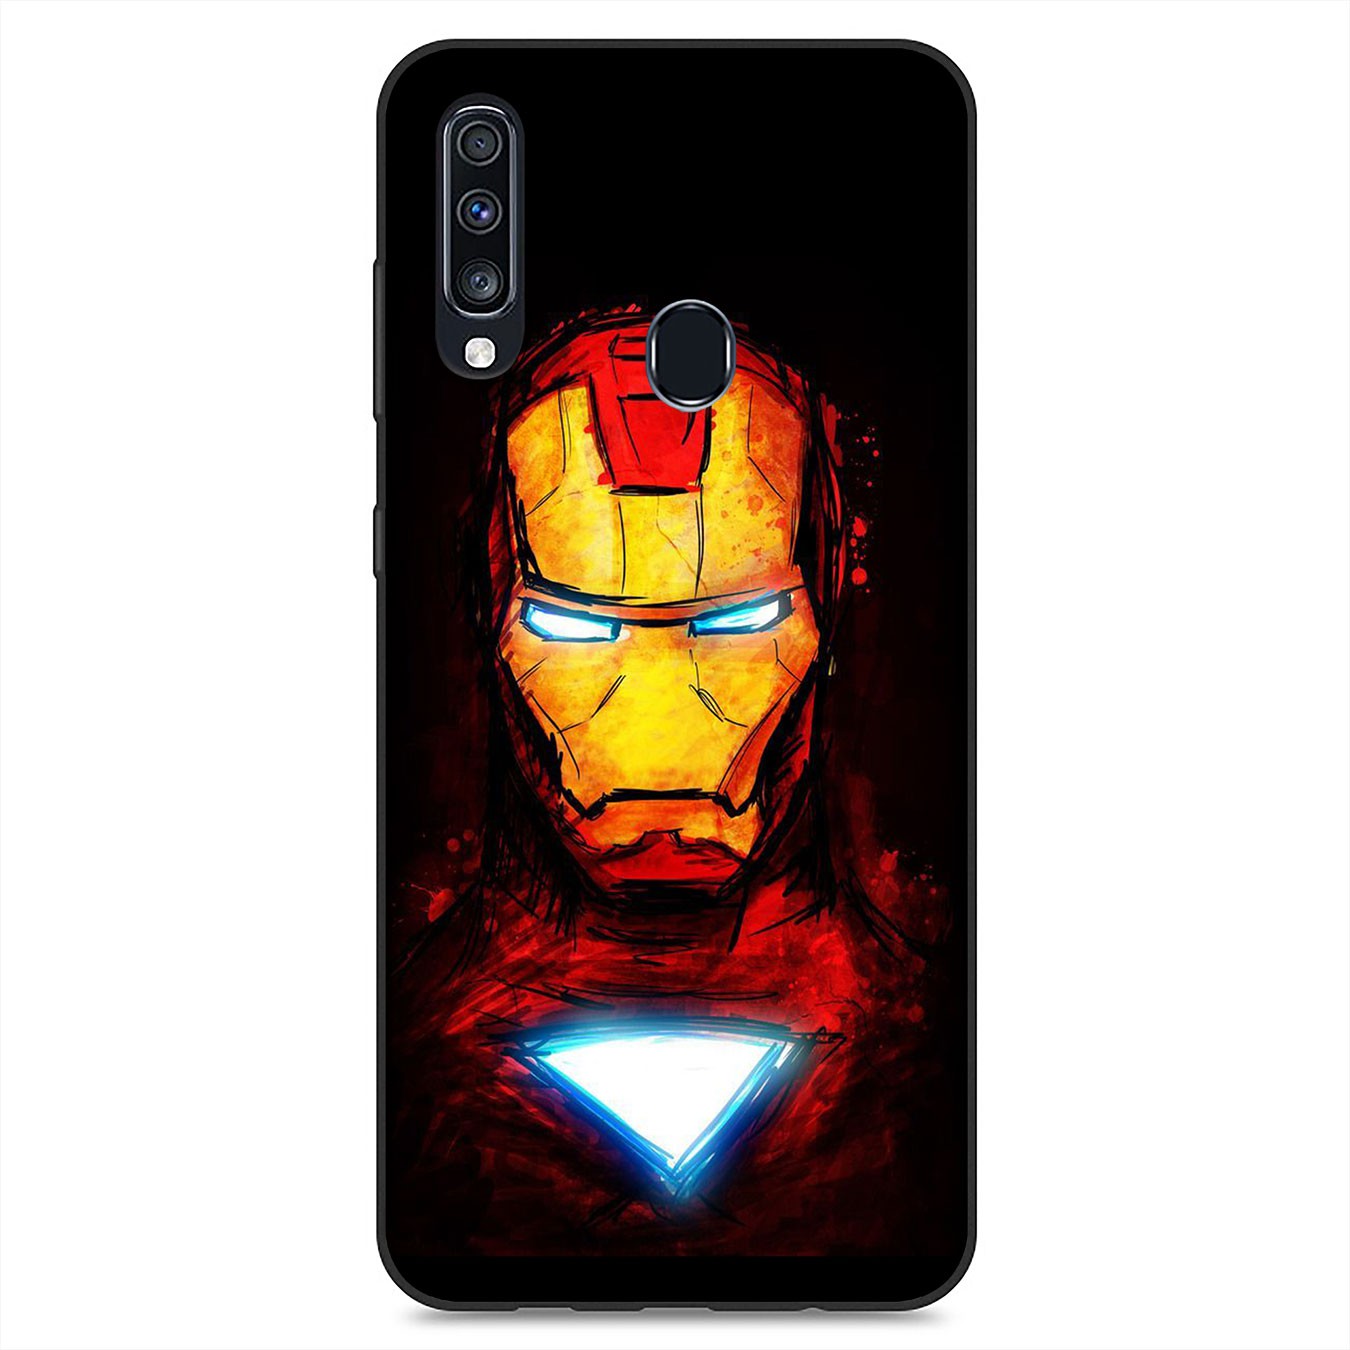 MARVEL Ốp Lưng Silicone Mềm Phong Cách Avengers Iron Man Cho Xiaomi Redmi Note 5 Pro Plus 5a 4x S2 Mi Poco X3 Nfc M3 9t